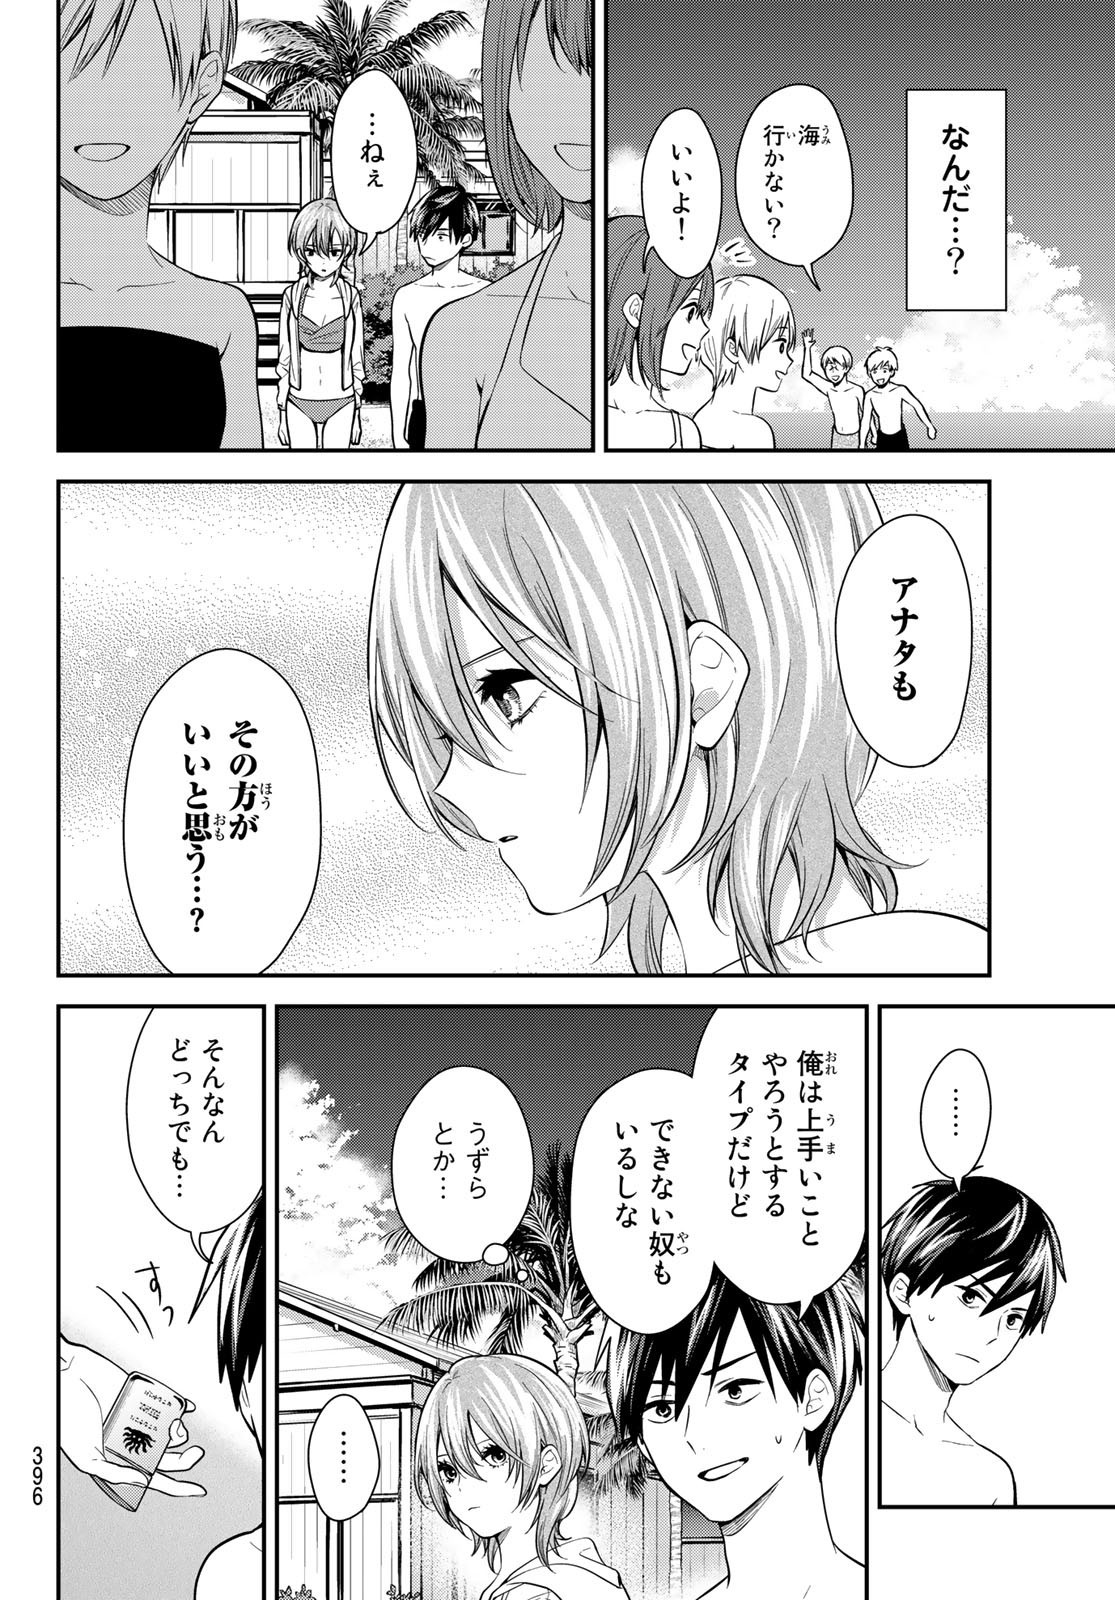 Kimi ga Megami Nara Ii no ni (I Wish You Were My Muse) - Chapter 020 - Page 6